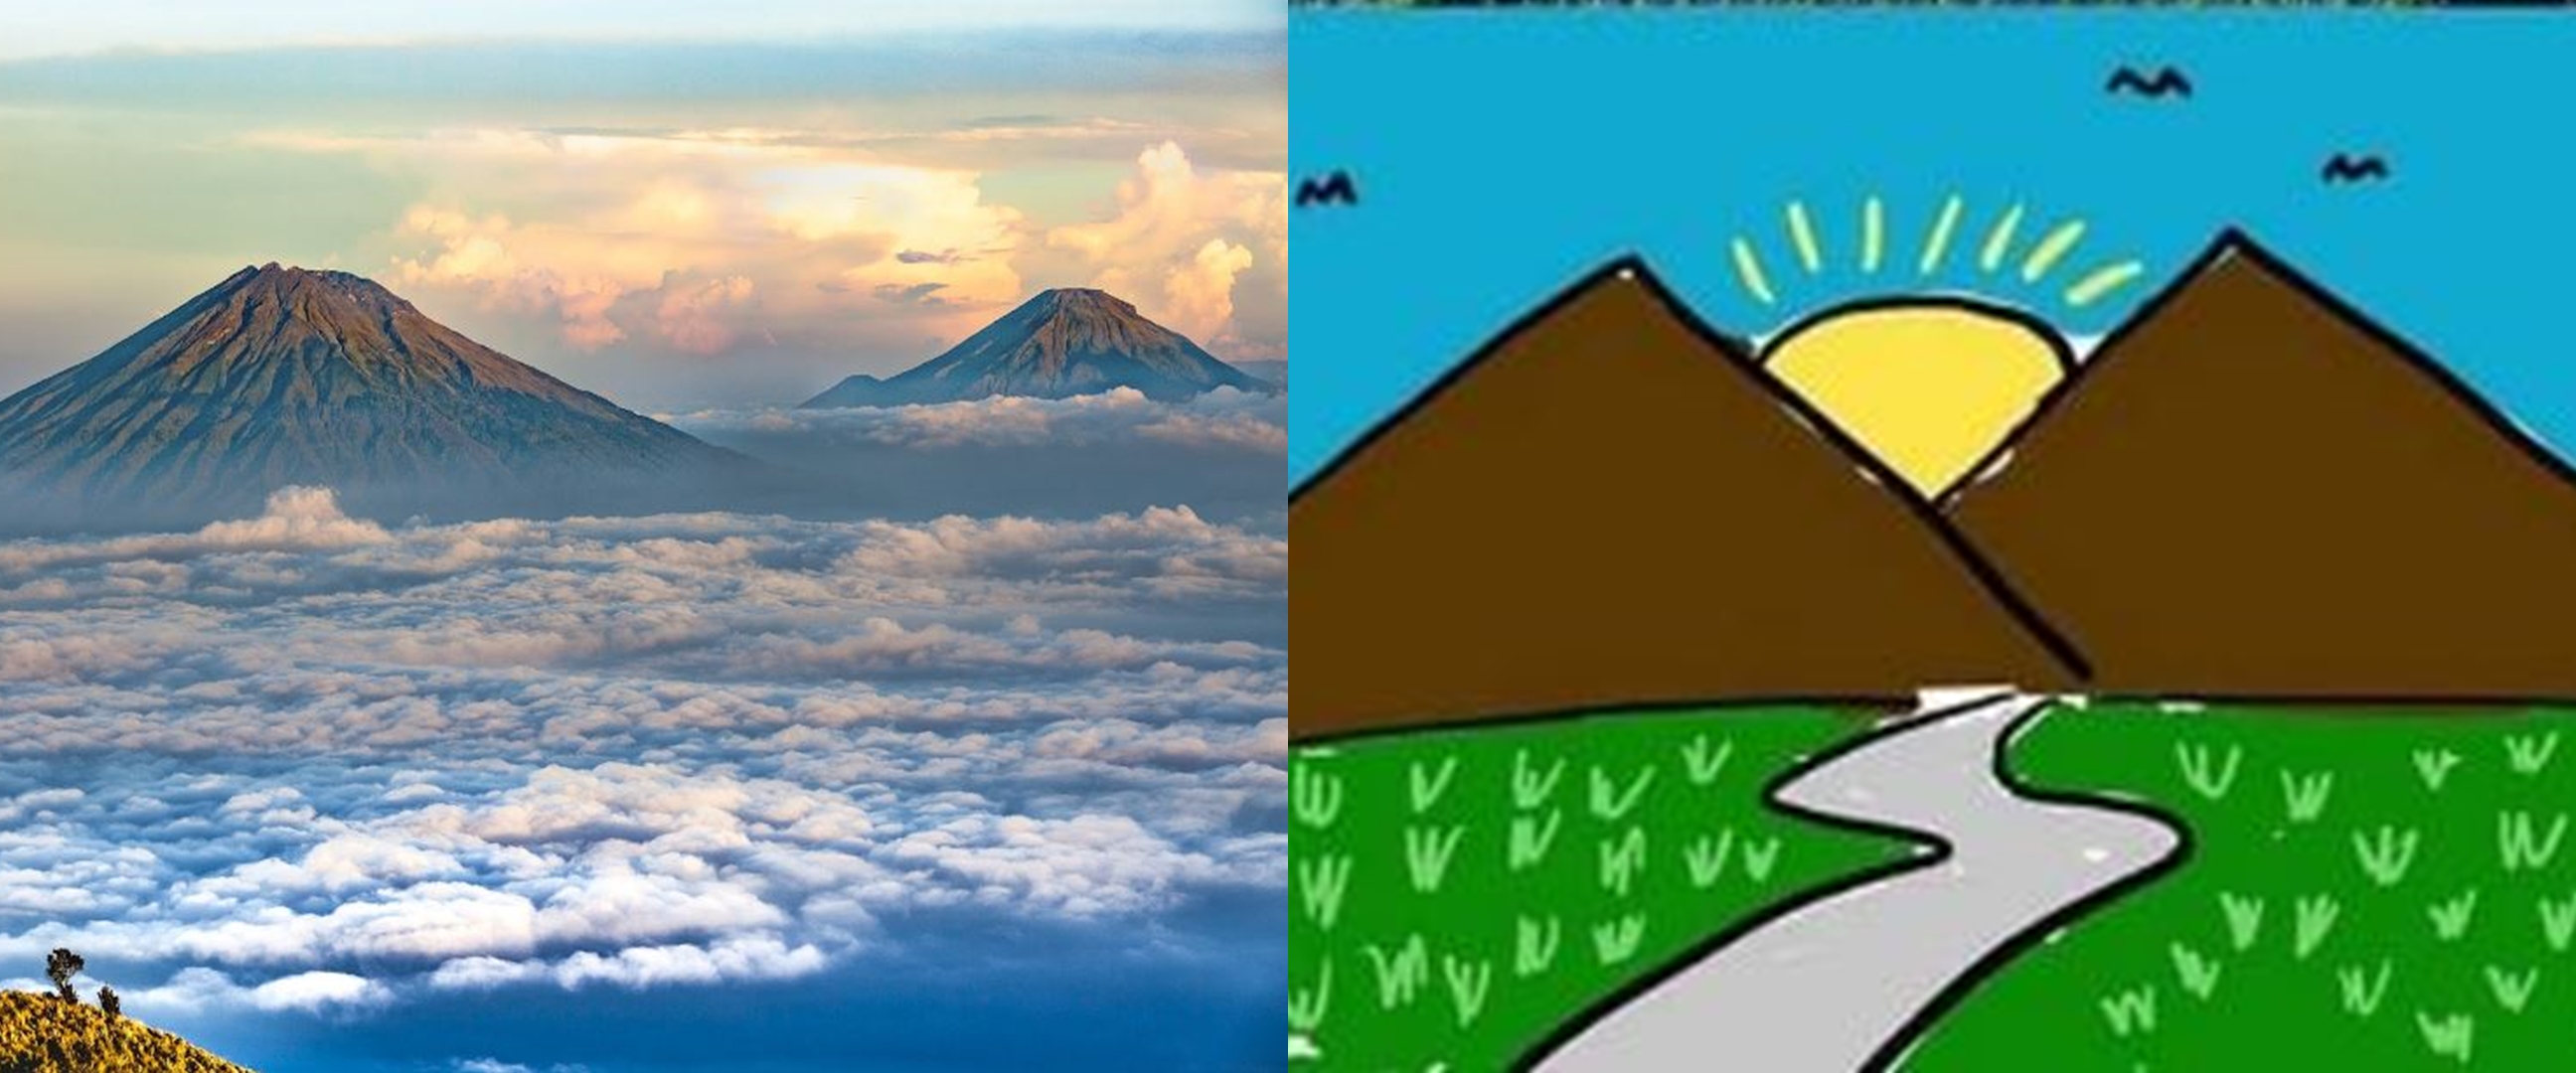 Cerita misteri Sumbing dan Sindoro, gunung kembar yang sering jadi gambar pemandangan anak SD